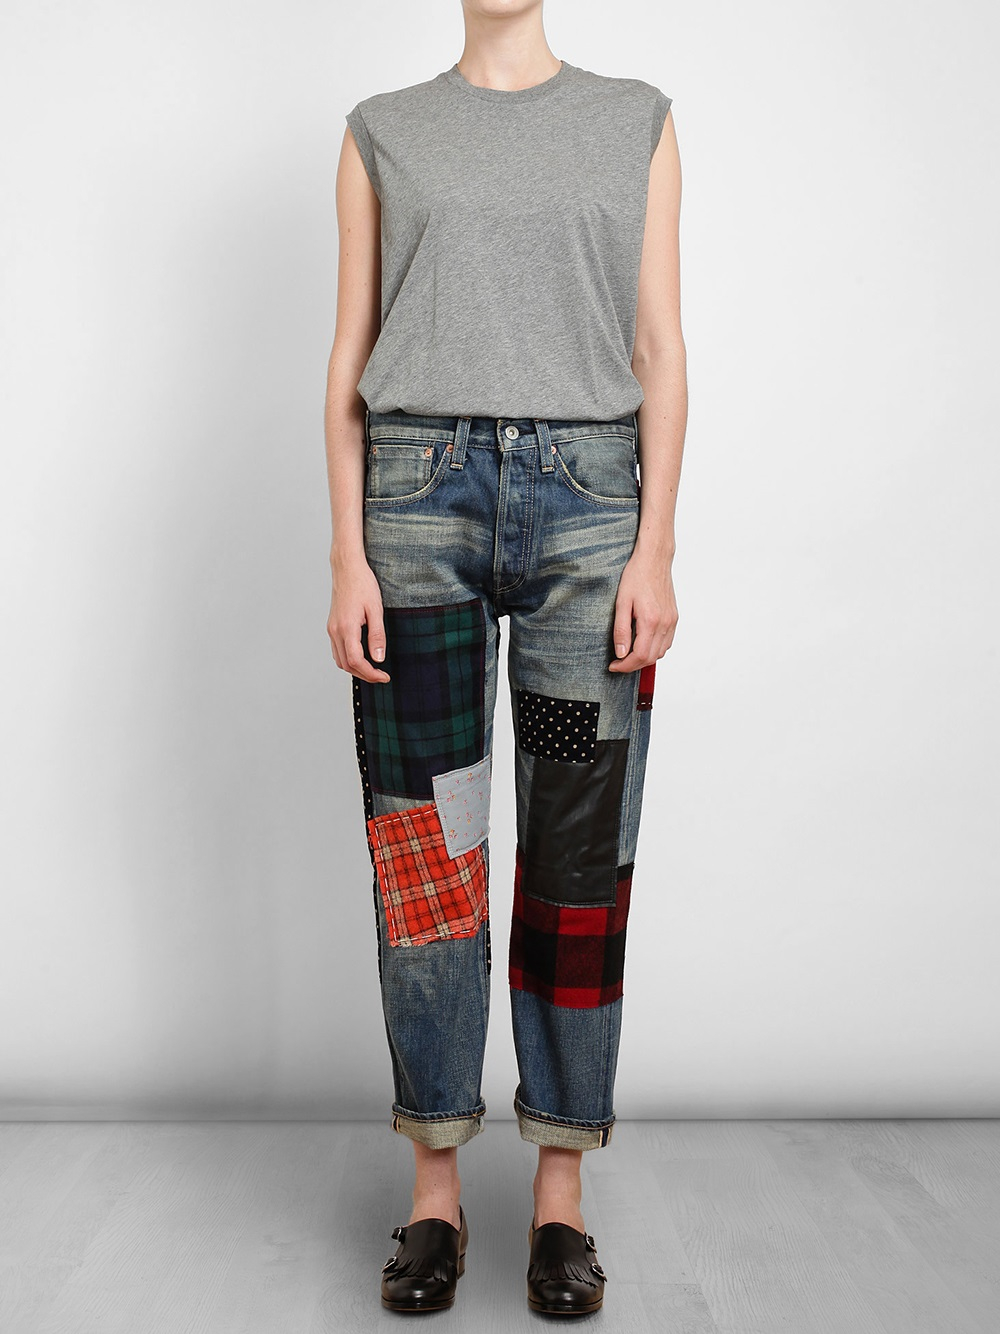 Lyst - Junya Watanabe Patch-work Denim Jeans in Blue